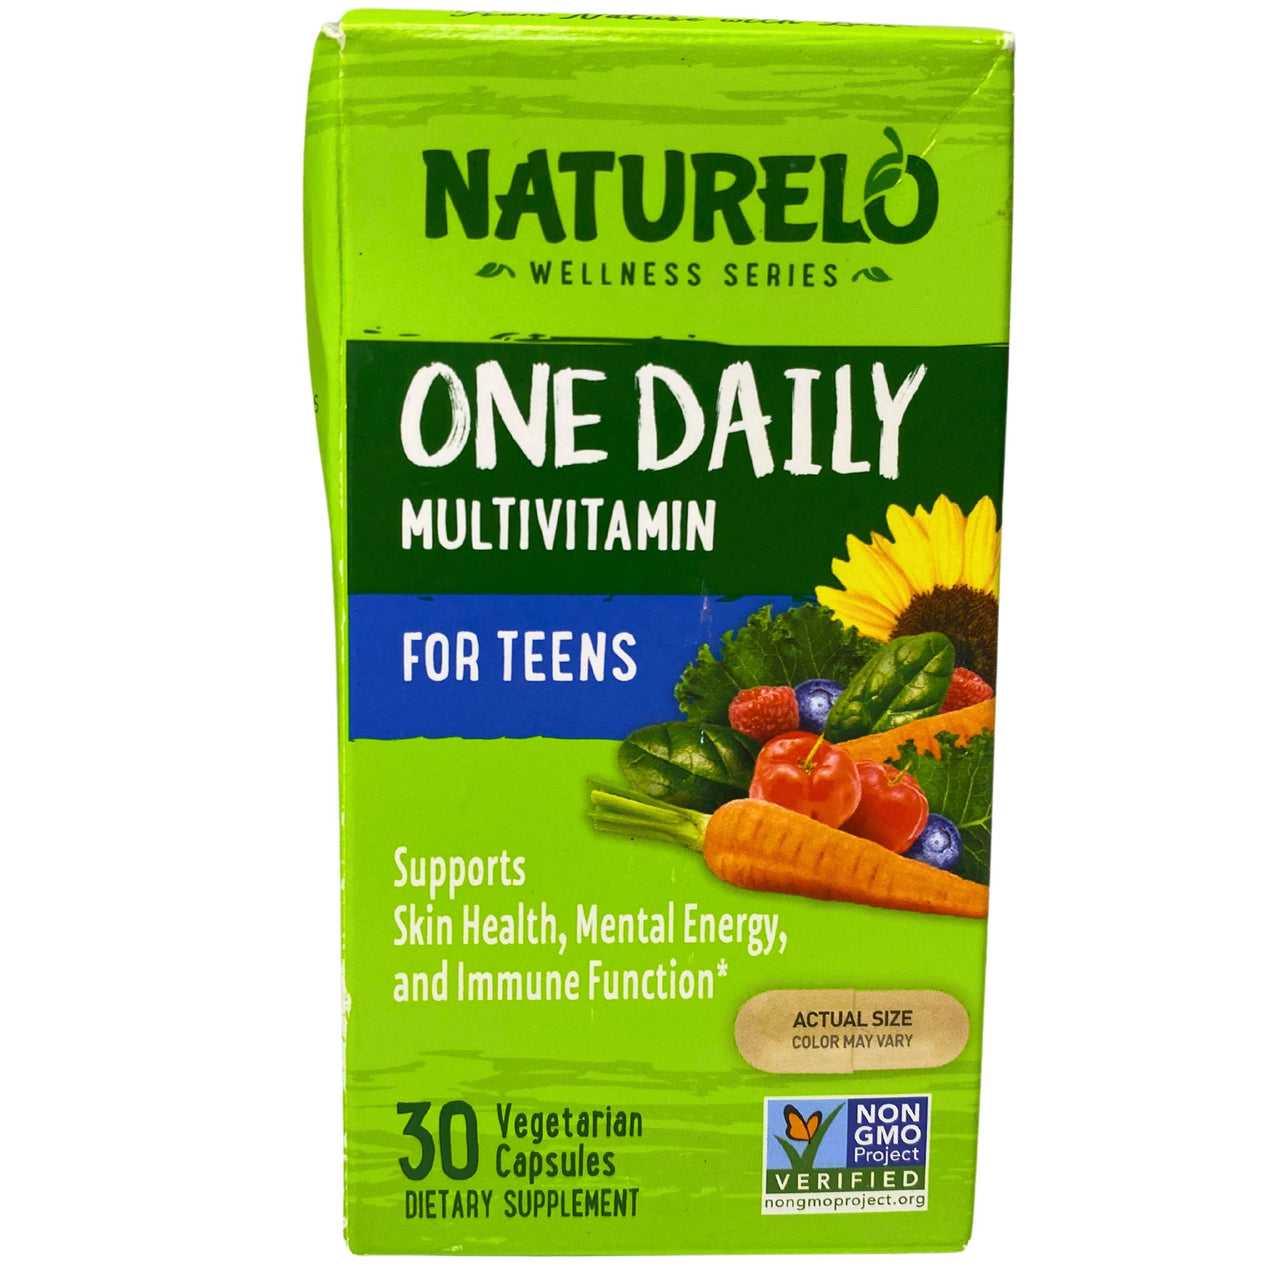 Naturelo Wellness Series One Daily Multivitamin